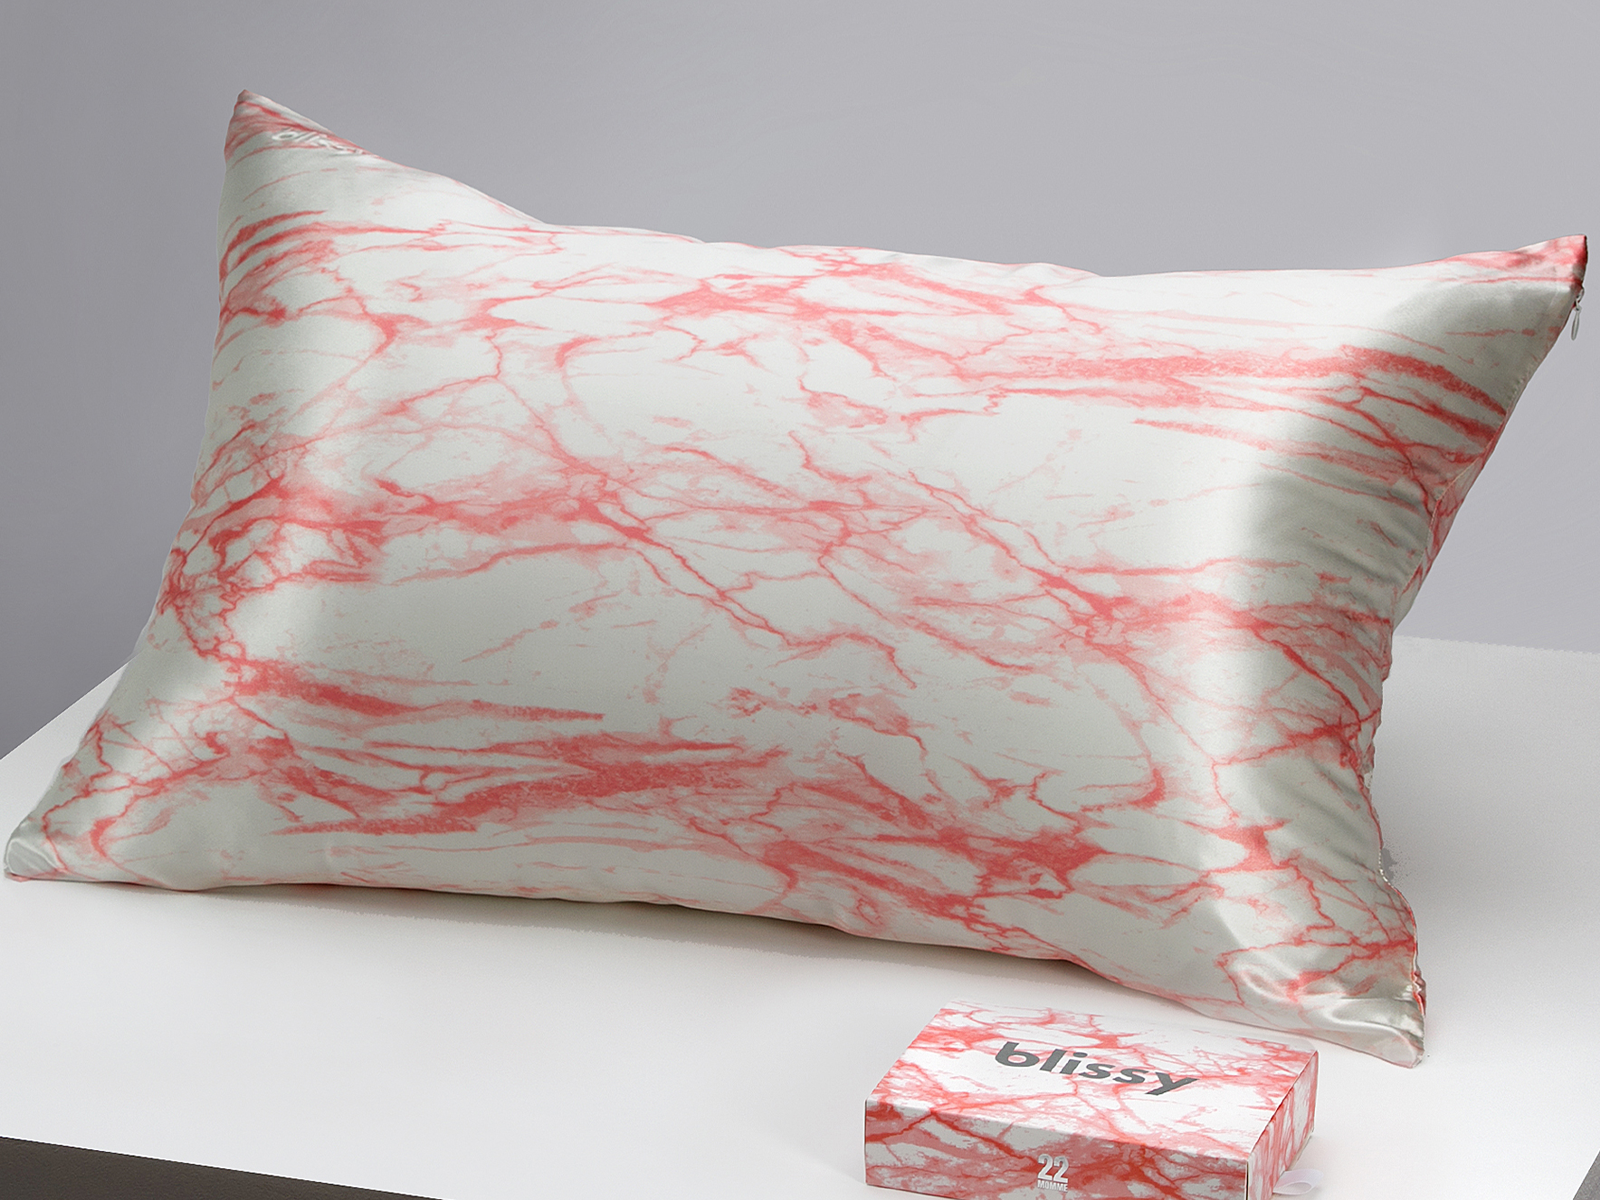 Blissy Standard 100% Mulberry Silk Pillowcase | Wht Marble